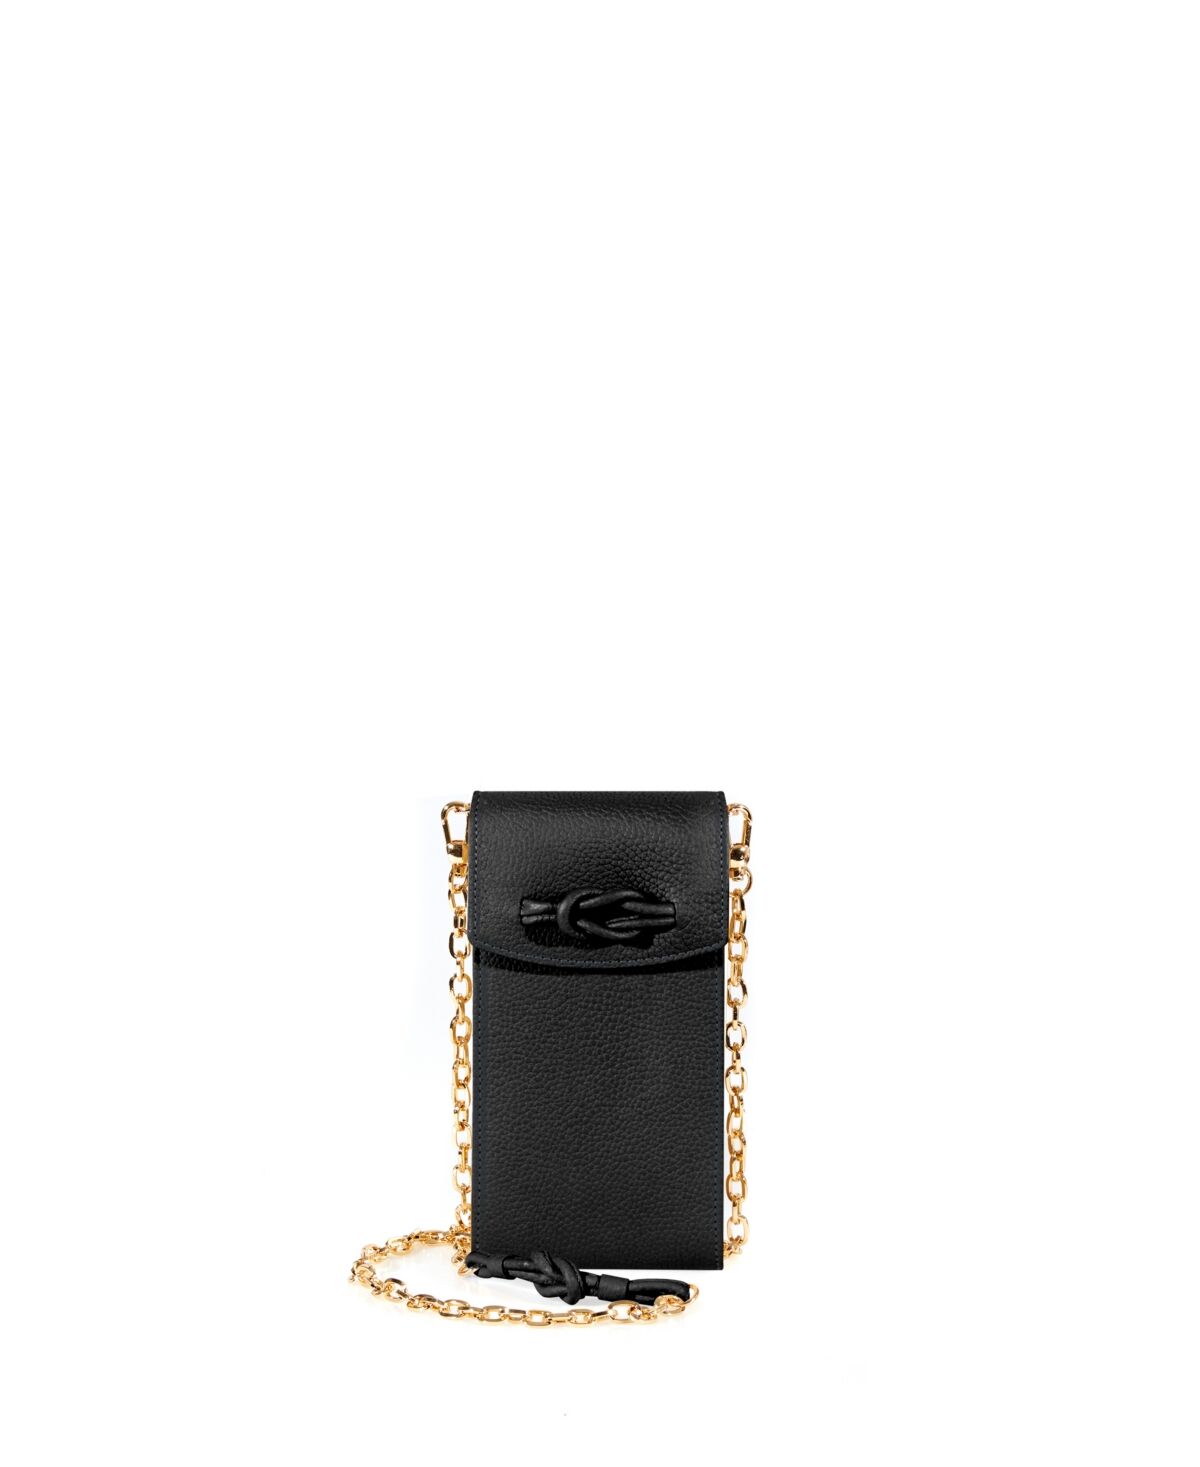 Esin Akan Women's Cornwall Phone Crossbody Bag - Black